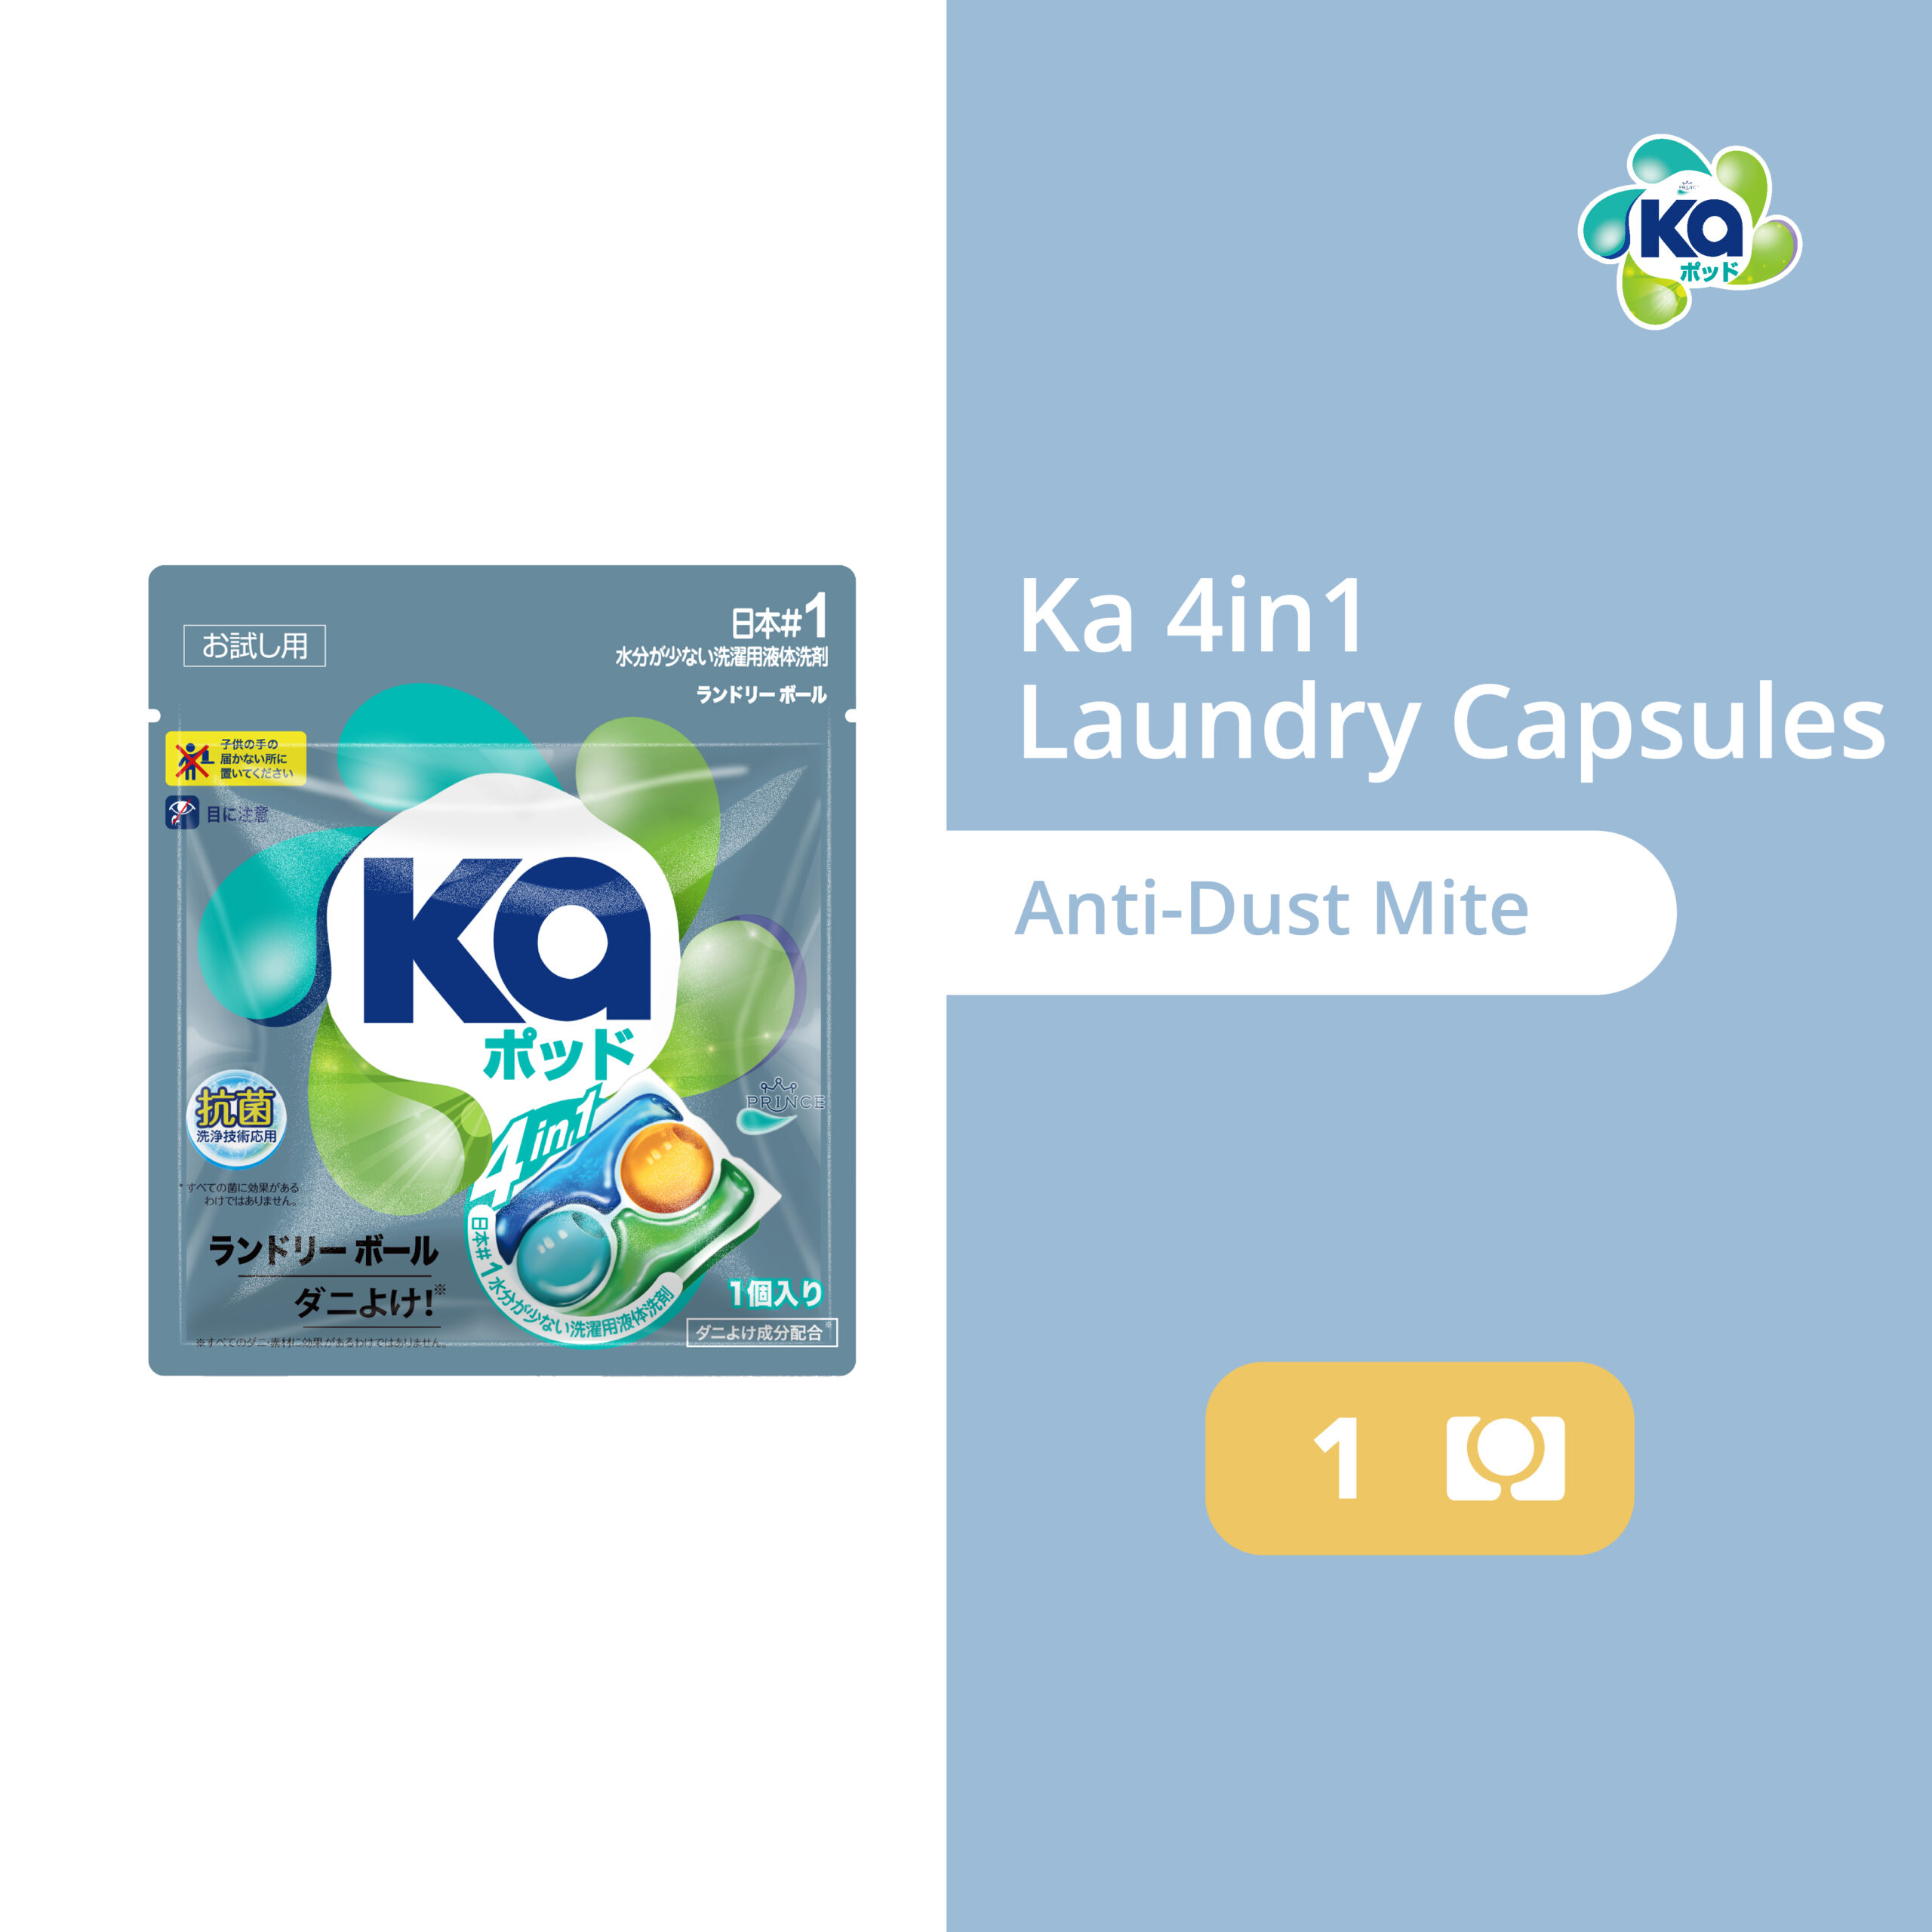 Ka 4in1 Laundry Capsules 1 Pod – Anti-Dust Mite